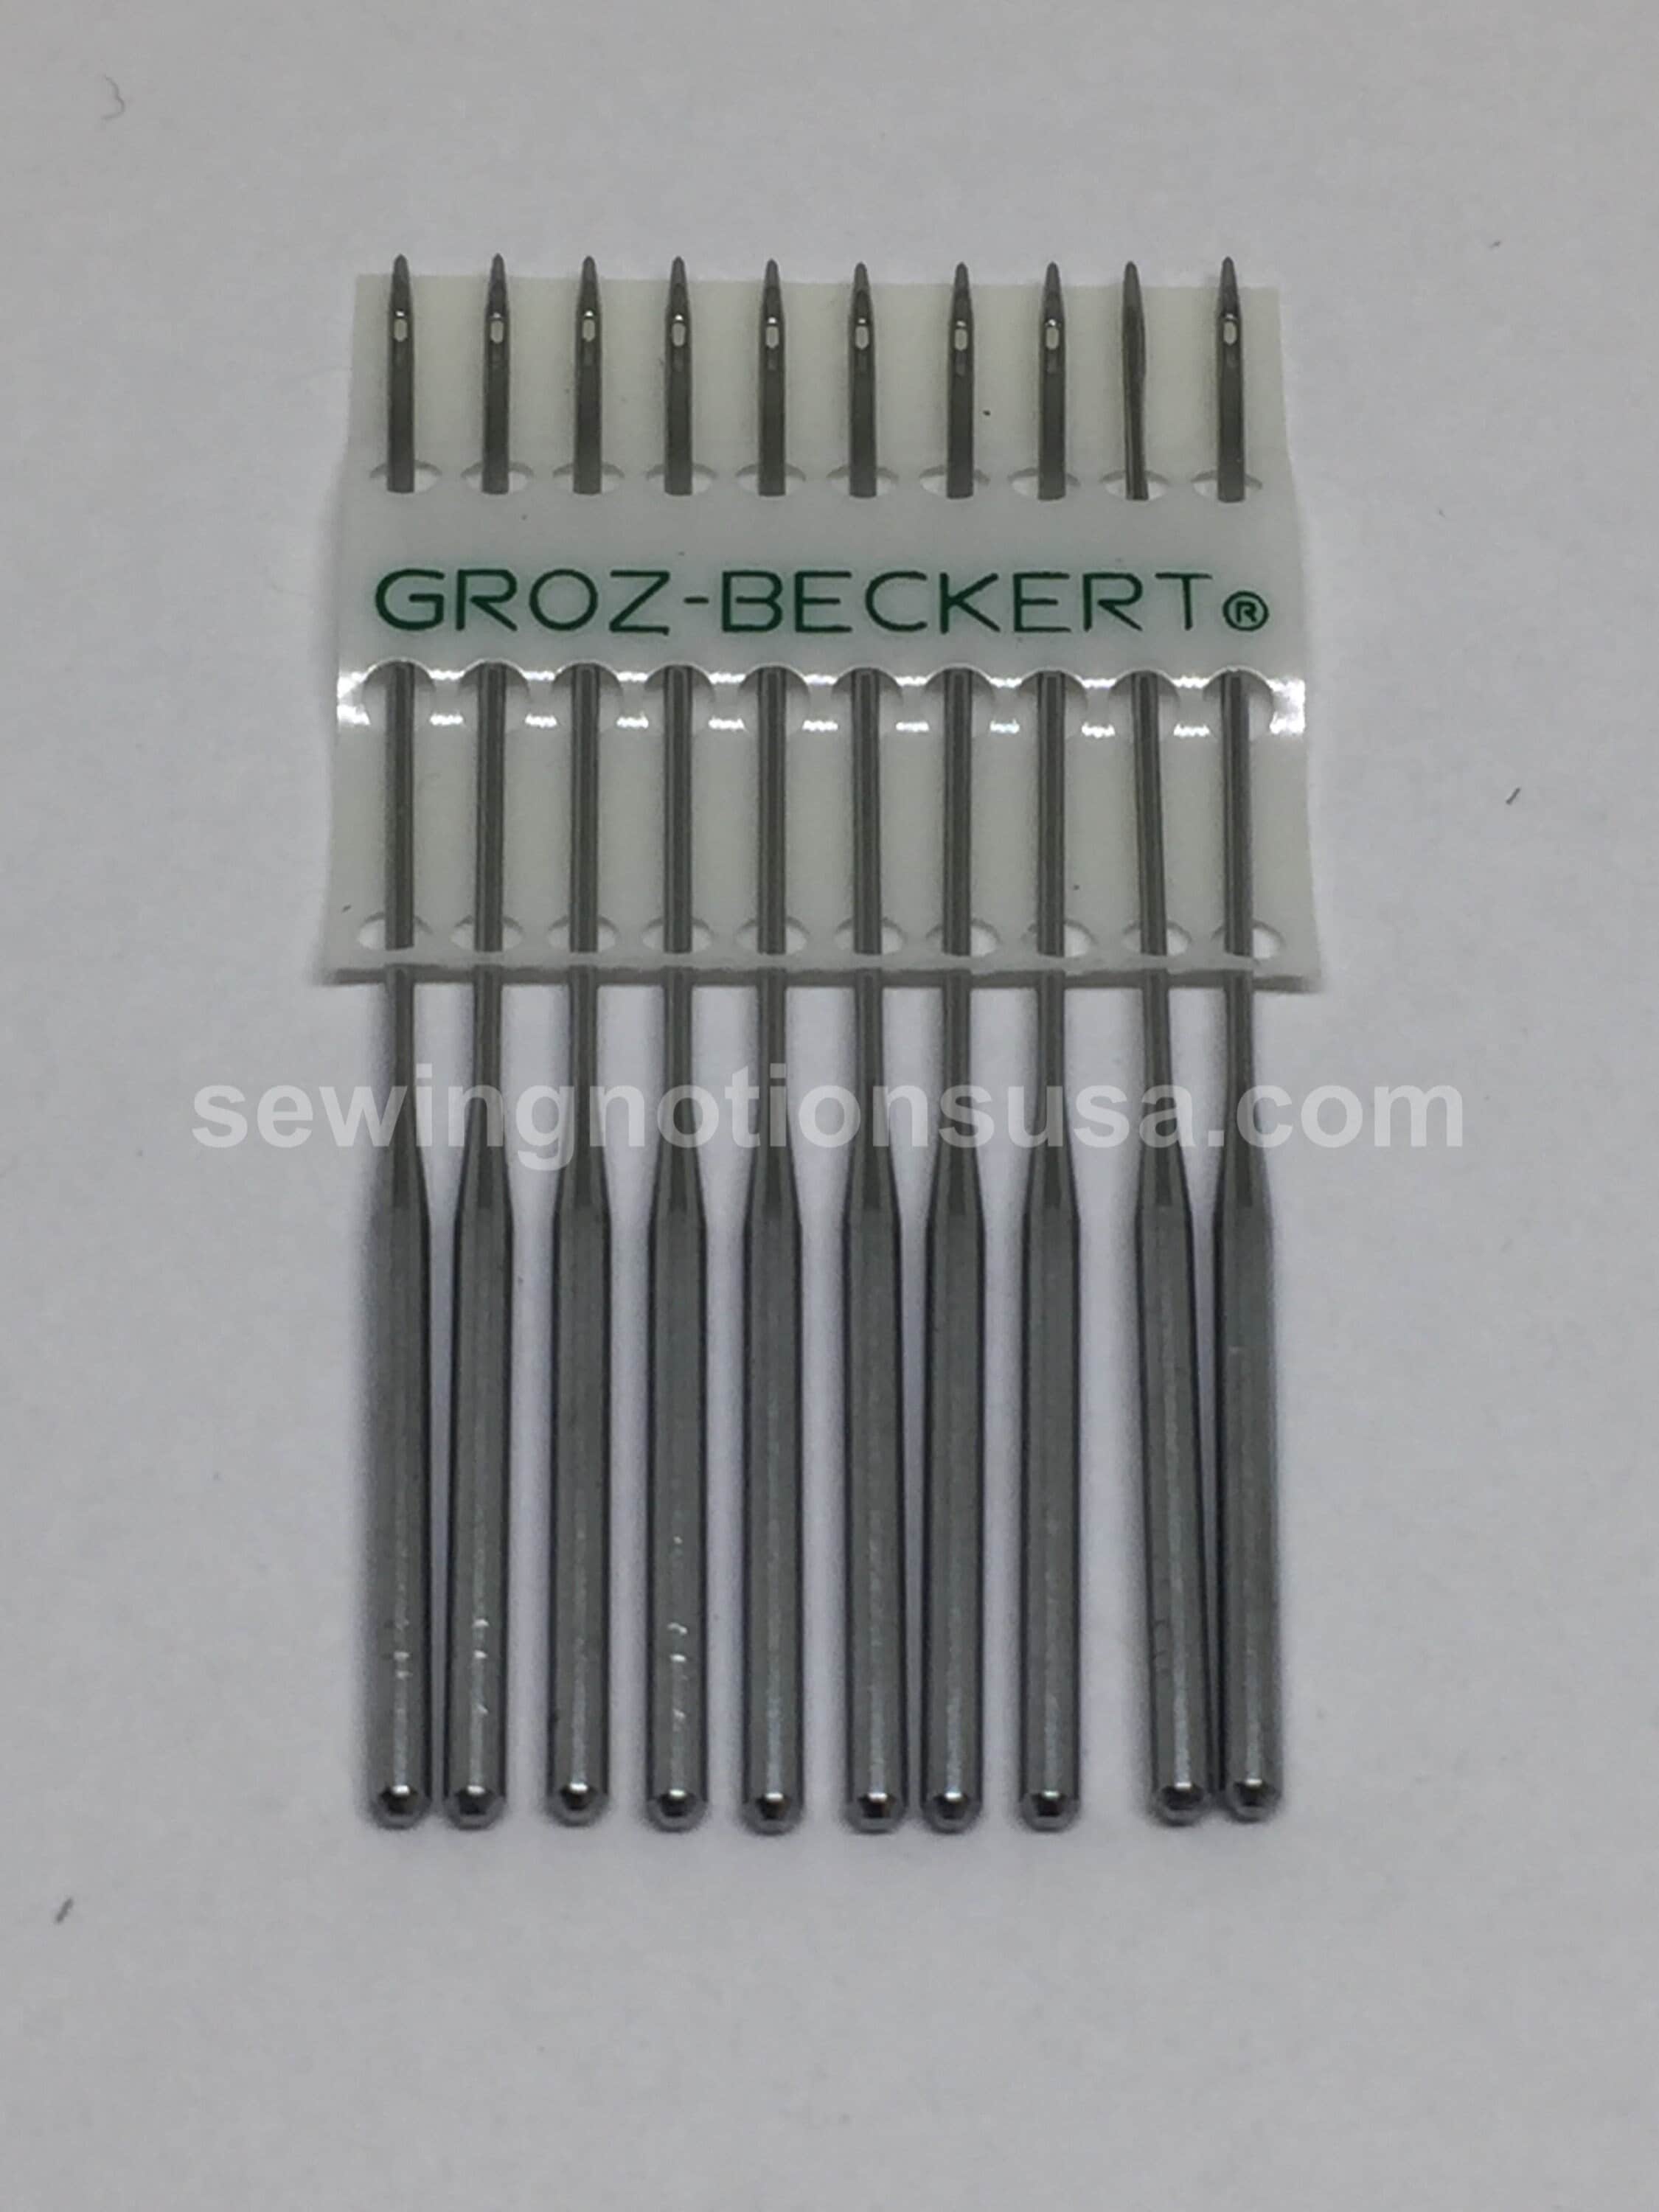 135x1 Dpx1 354 1451 Sewing Needles Groz-beckert 20pc Needles